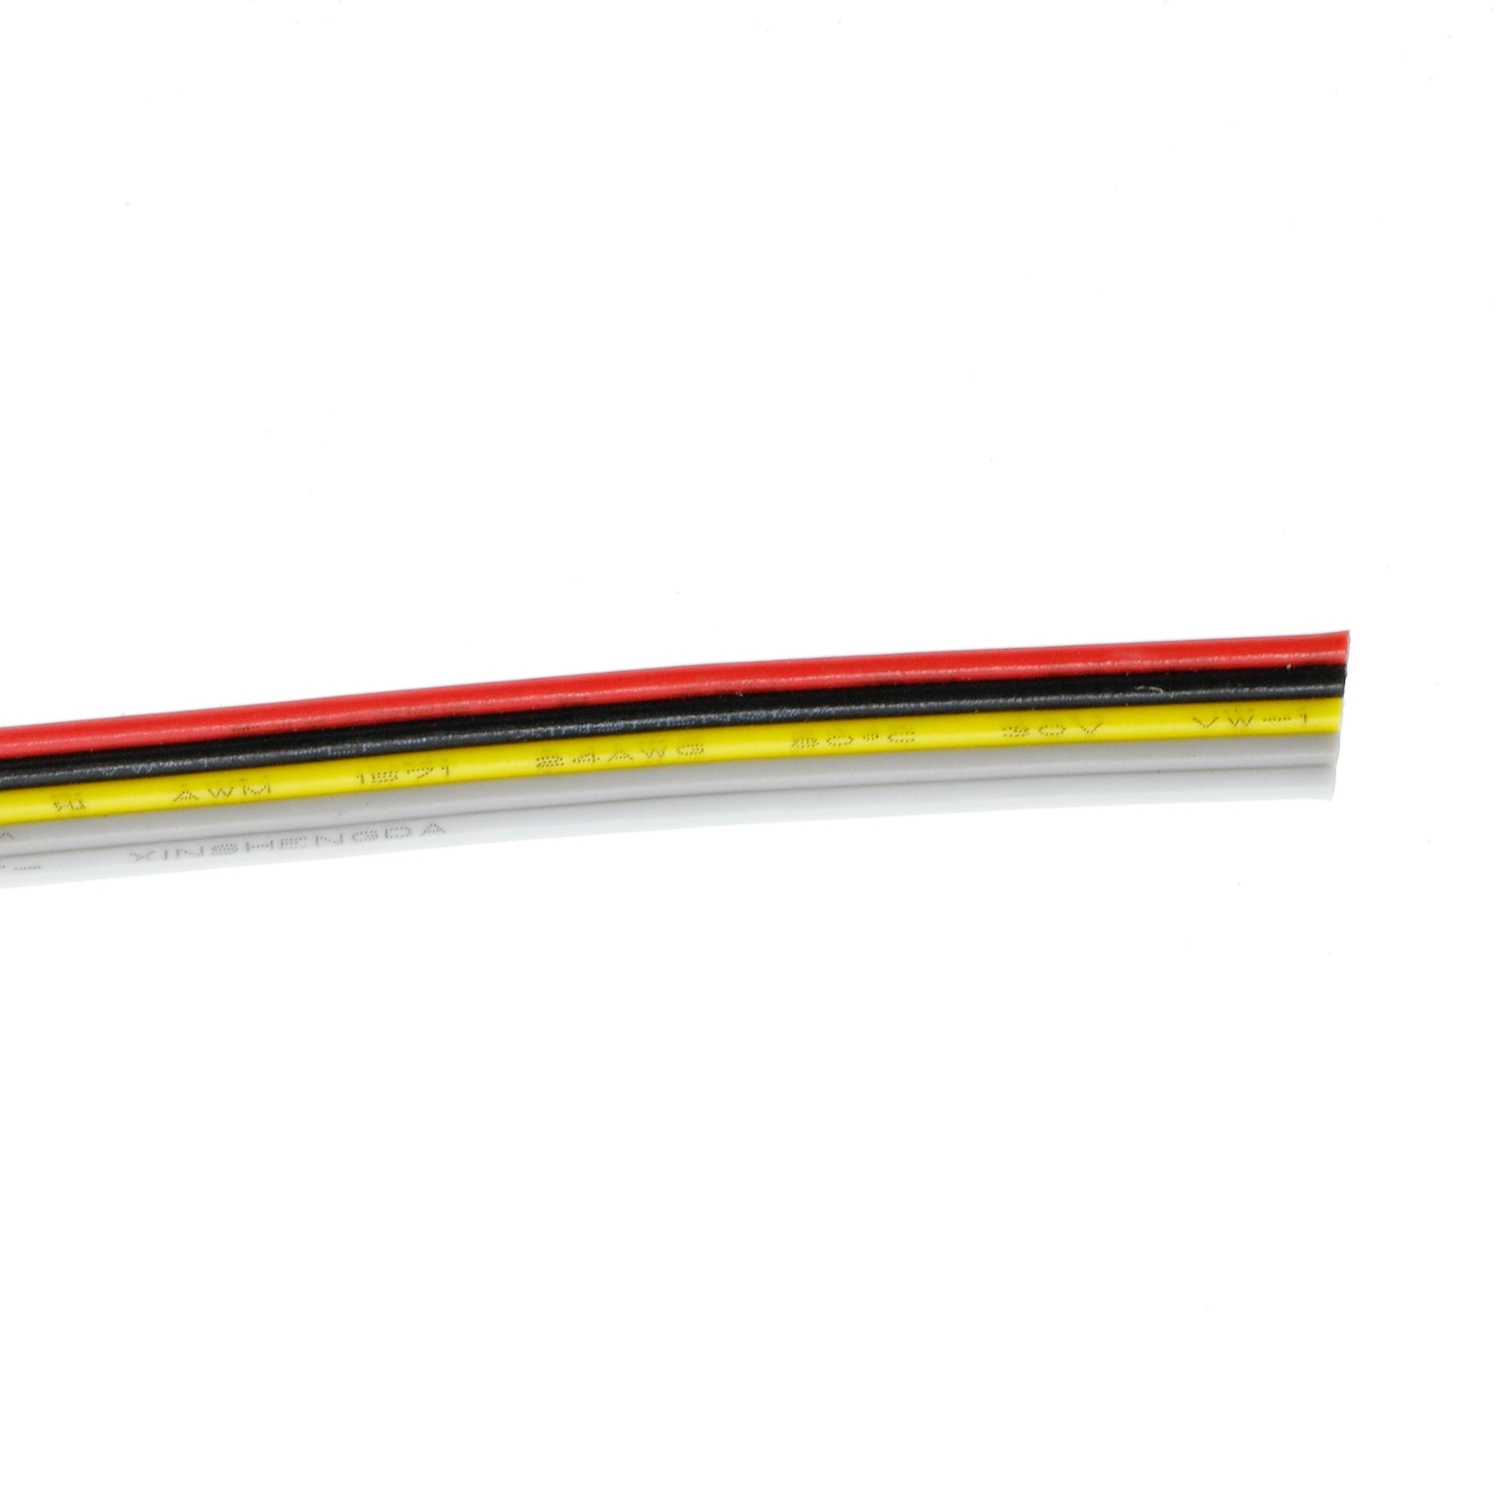 Flat Ribbon Cable UL1571